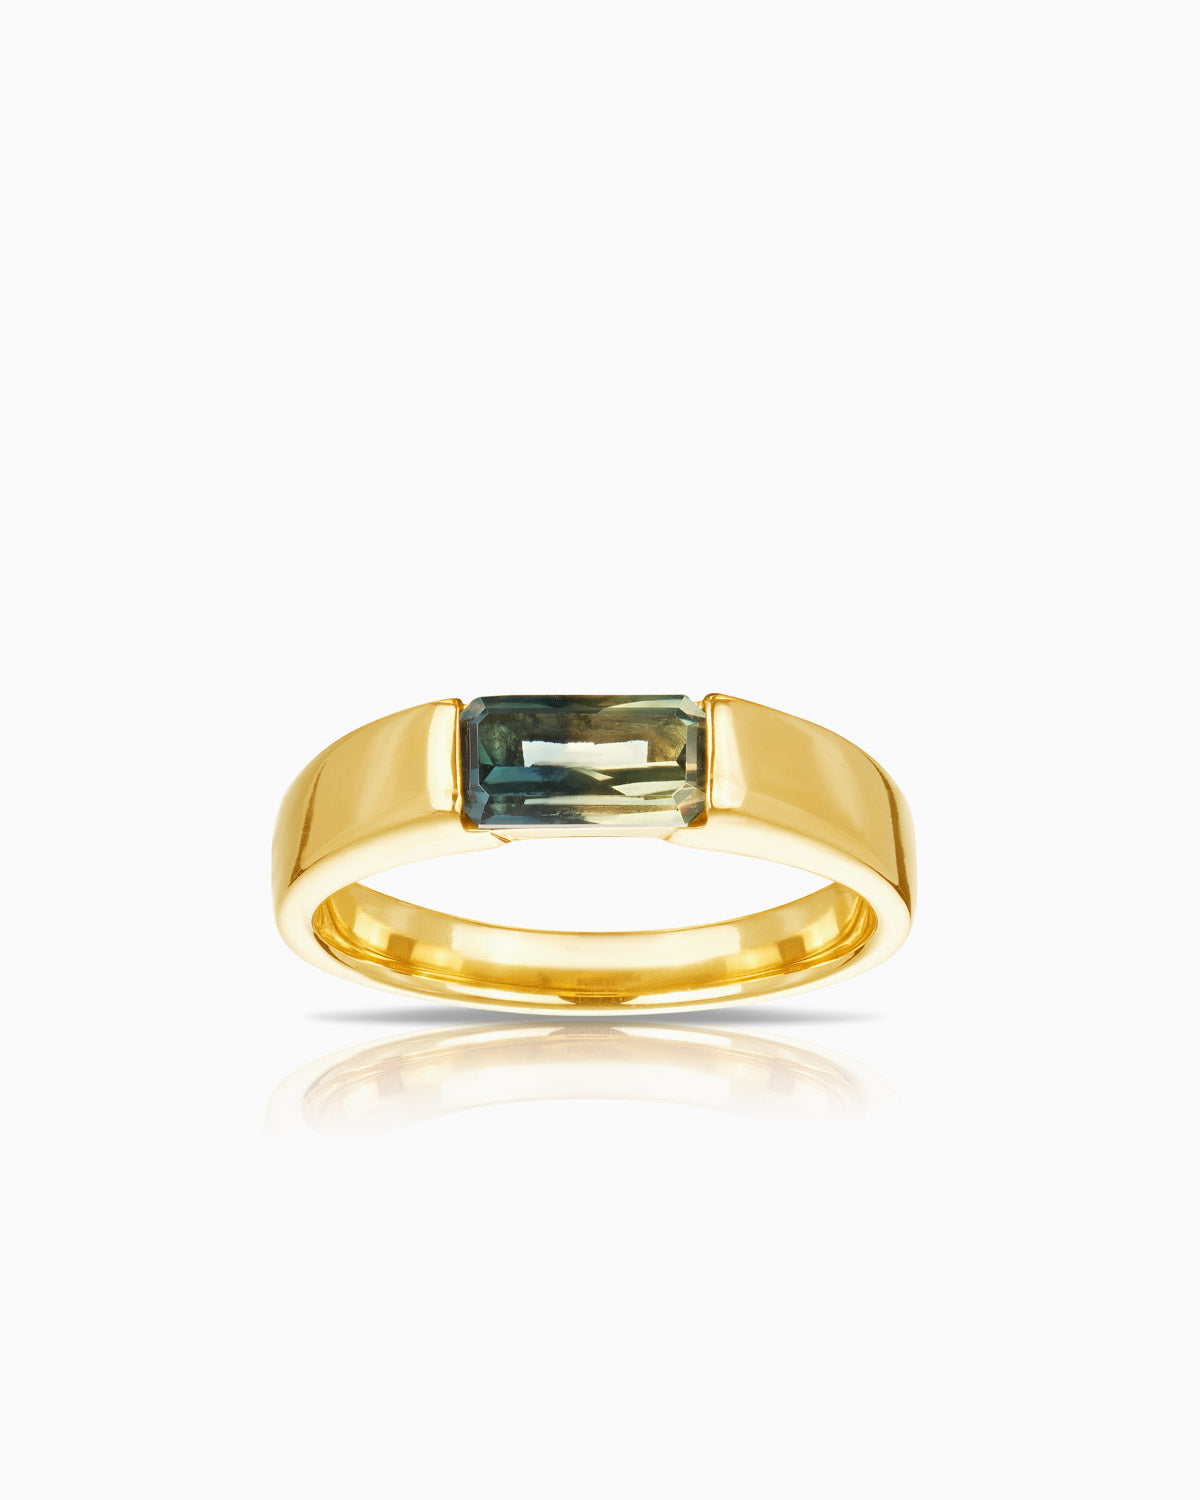 close up image of tension set australian sapphire ring featuring 18 karat yellow gold.